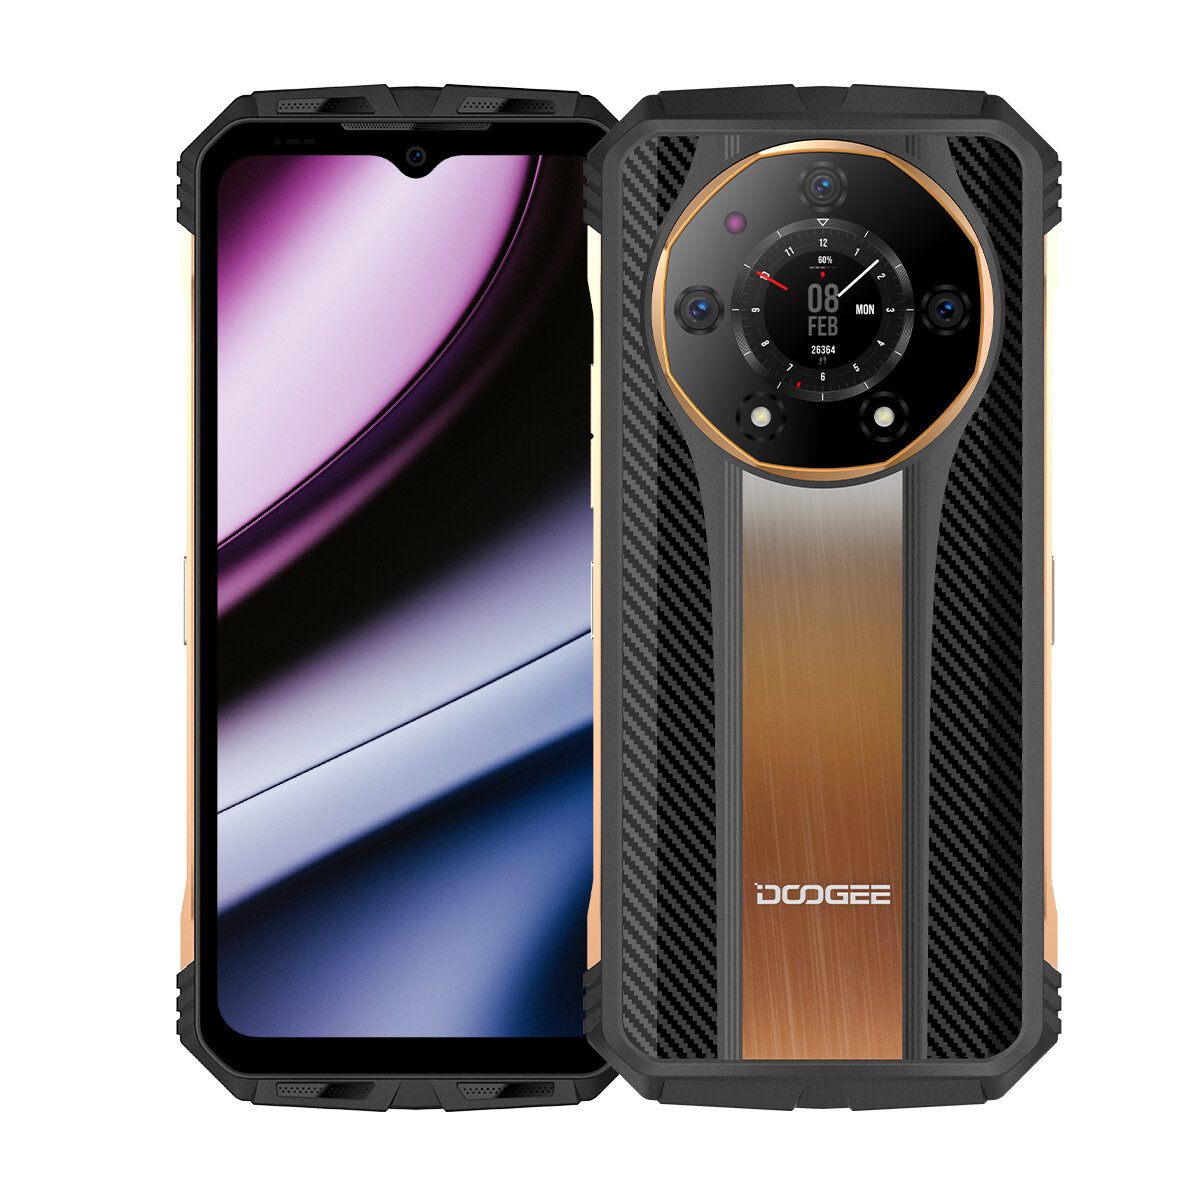 DOOGEE S110 Global Version Innovative Rear Display 22GB 256GB 50MP Triple Camera Night Vision Camera Helio G99 6.58 inch 120Hz 10800mAh 66W Fast Charge NFC IP68 IP69K Waterproof 4G Rugged Smartphone